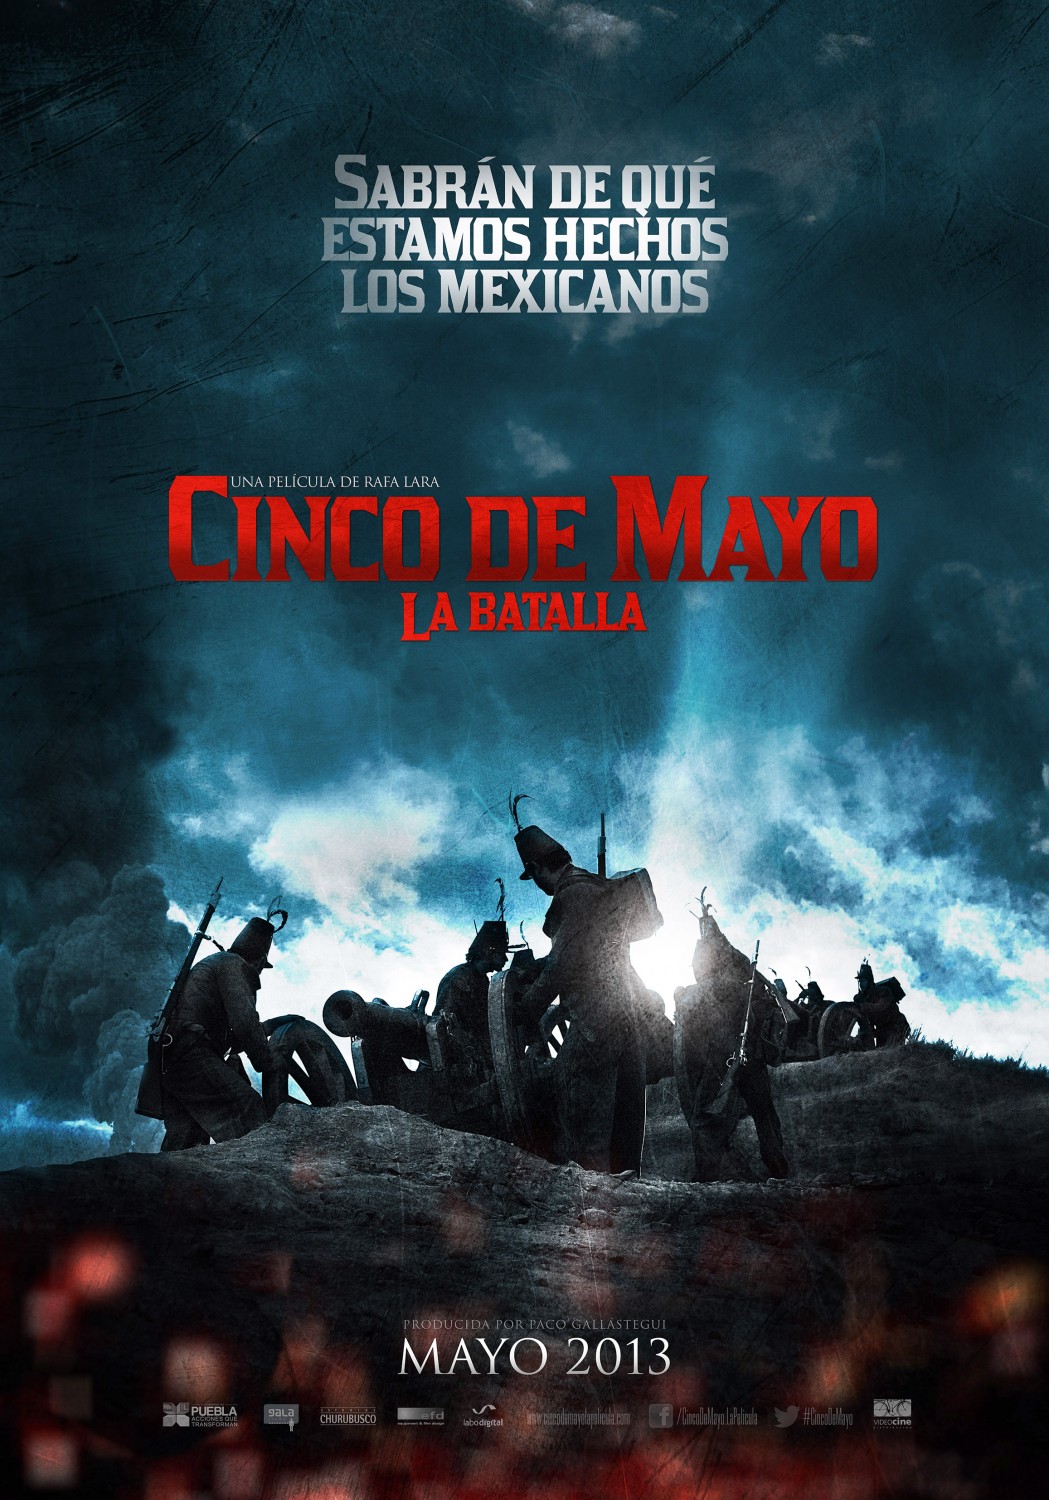 Extra Large Movie Poster Image for Cinco de Mayo, La Batalla (#2 of 3)